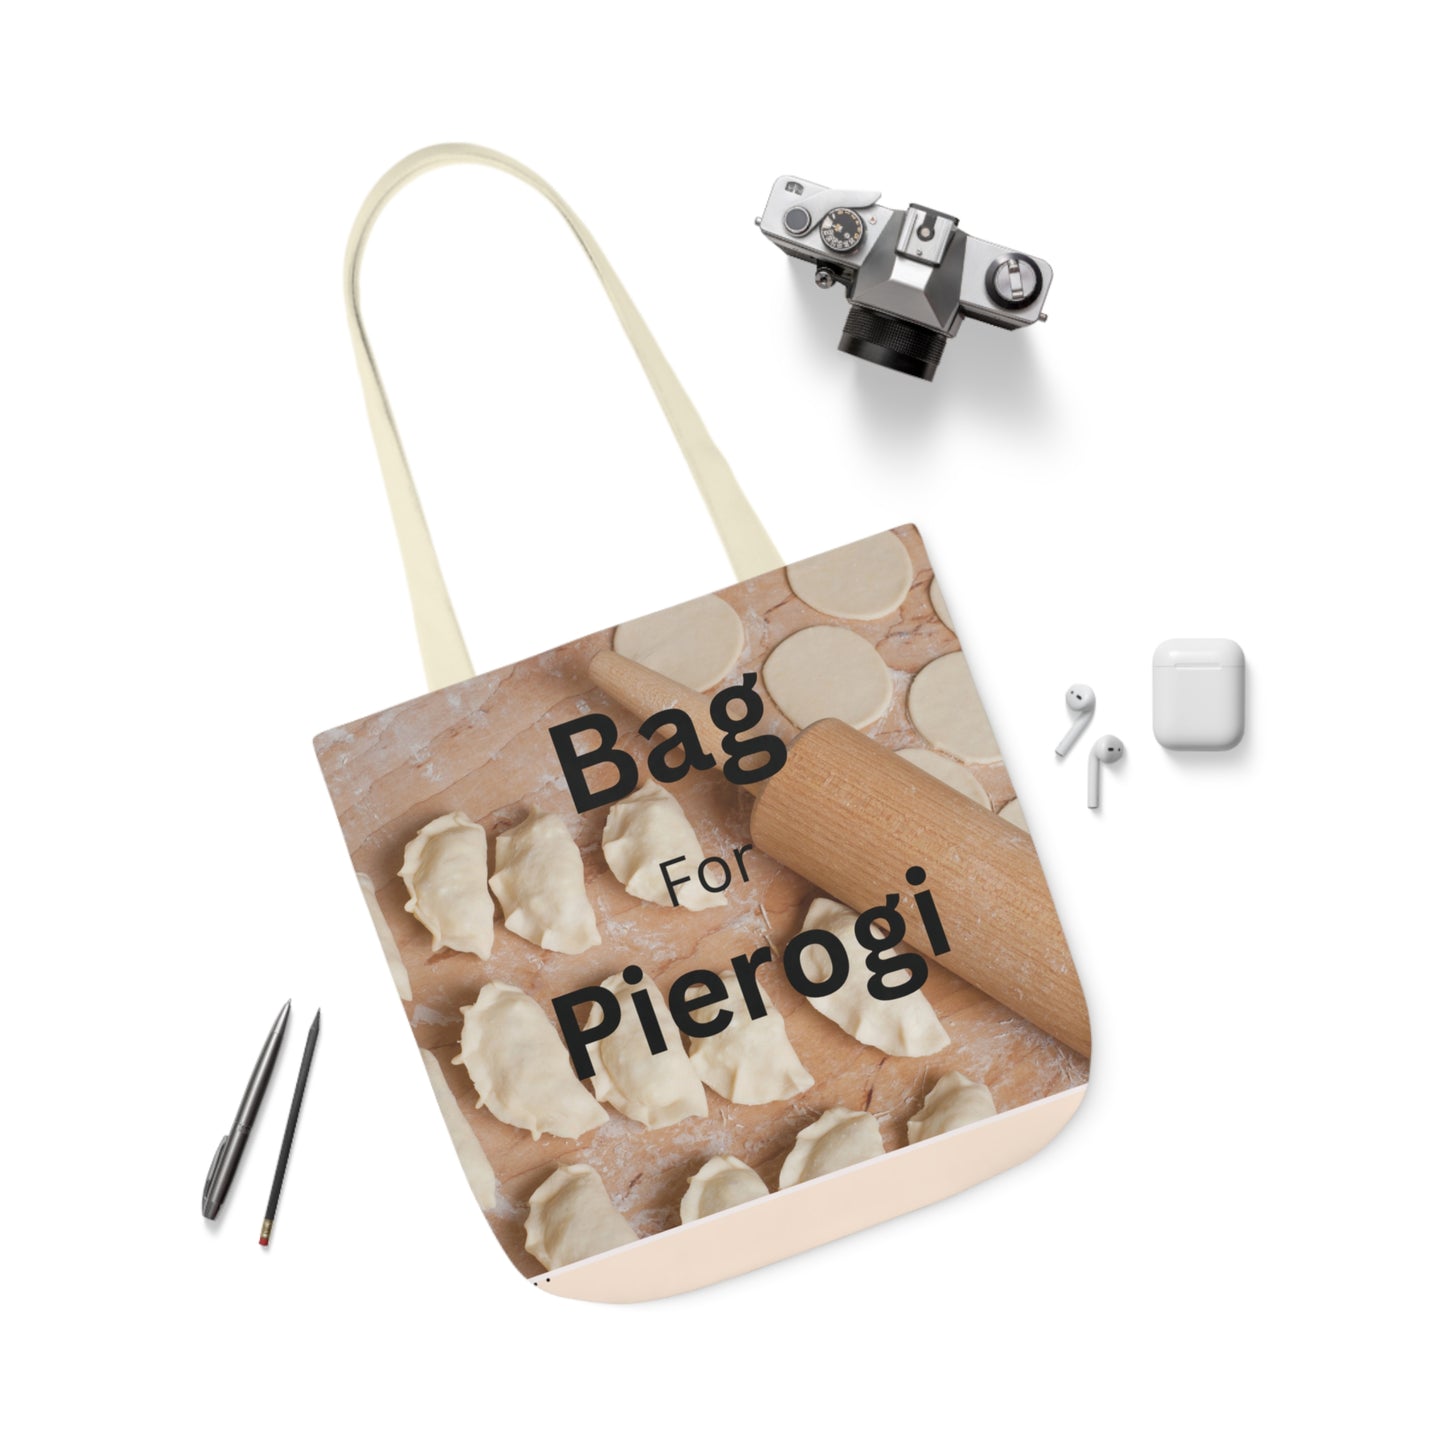 Polyester Canvas Tote Bag "Bag For Pierogi"